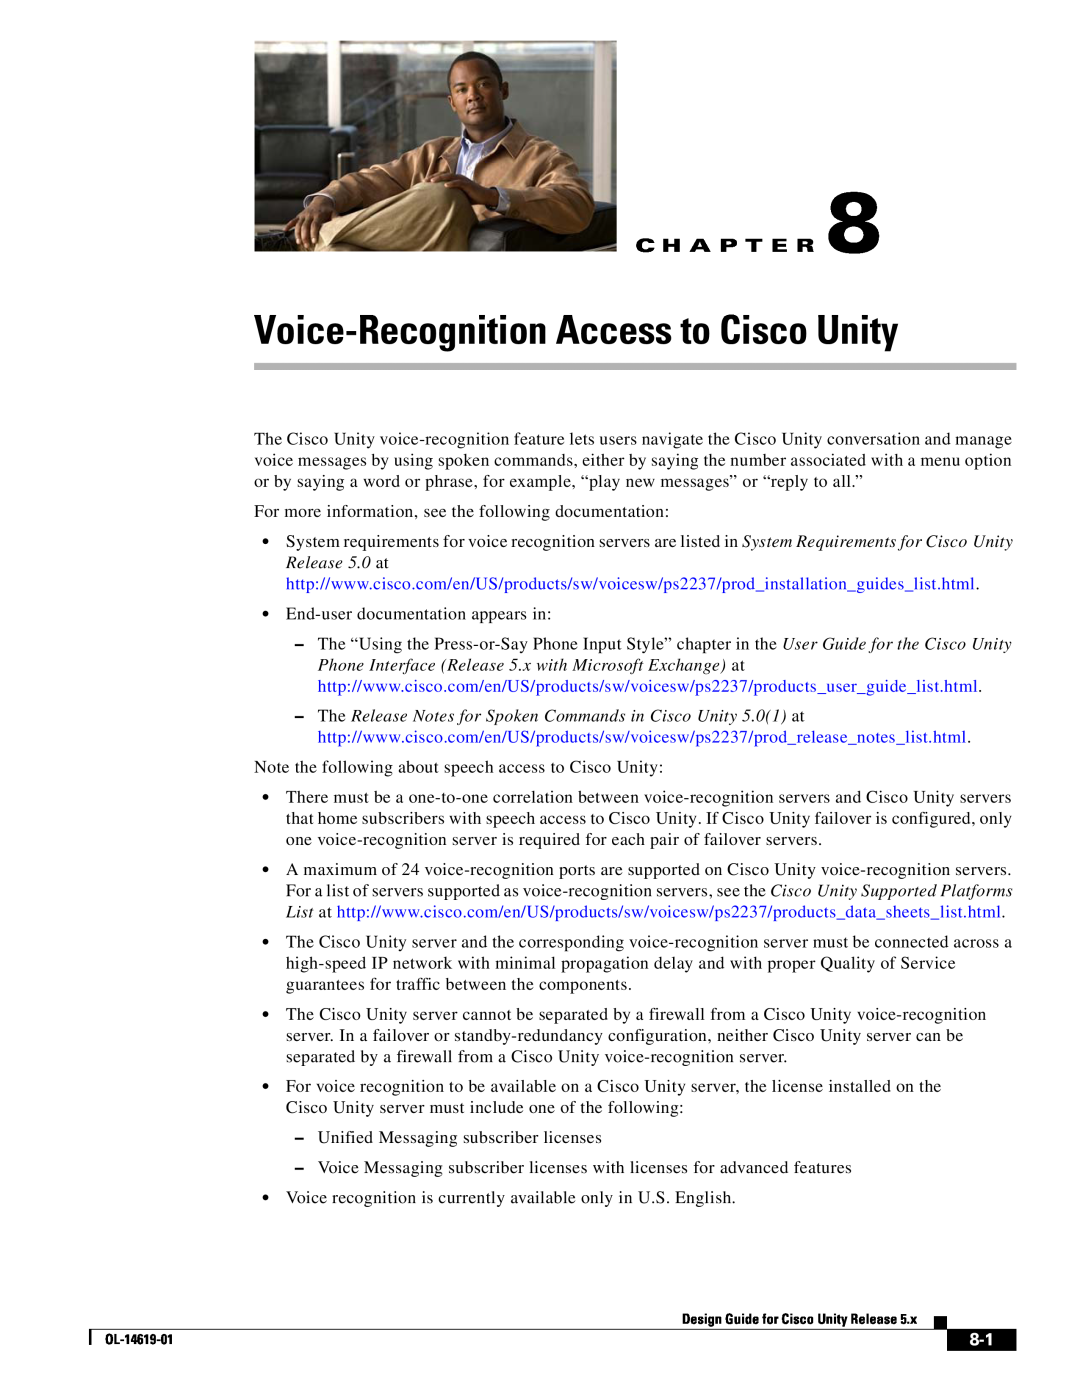 Cisco Systems OL-14619-01 manual Voice-Recognition Access to Cisco Unity, C H A P T E R 